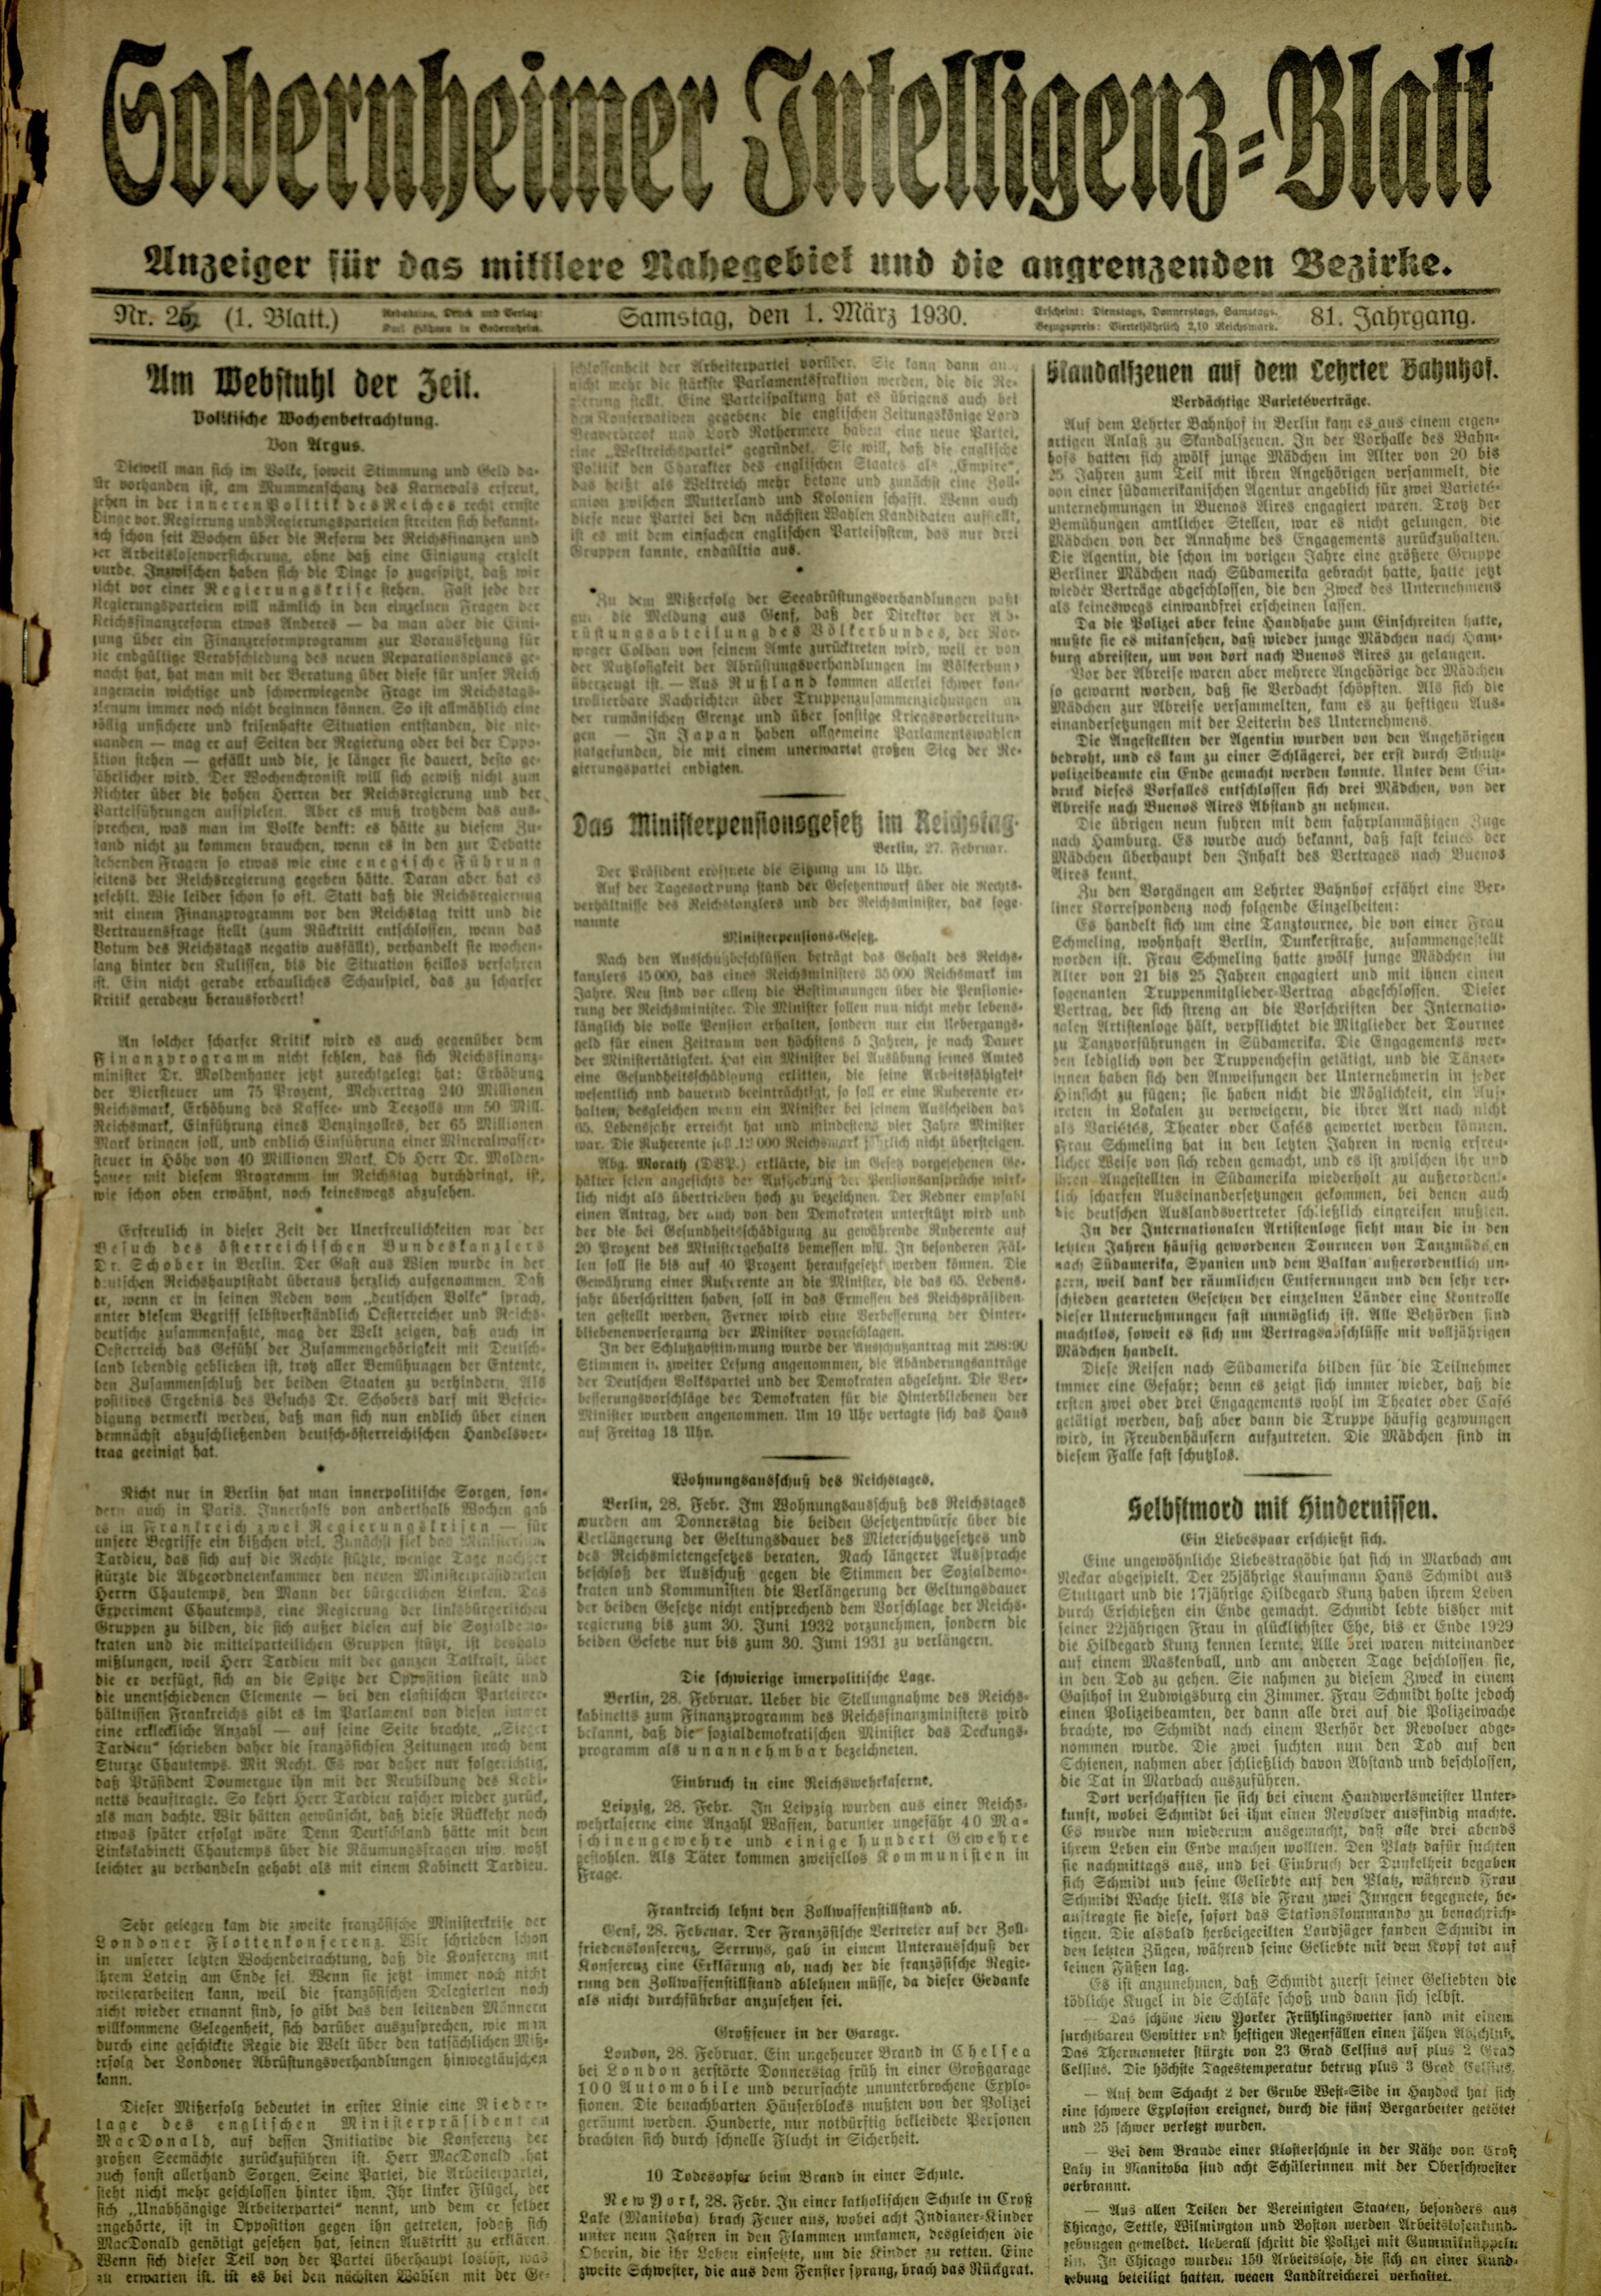 Zeitung: Sobernheimer Intelligenzblatt; März 1930, Jg. 81 Nr. 26 (Heimatmuseum Bad Sobernheim CC BY-NC-SA)